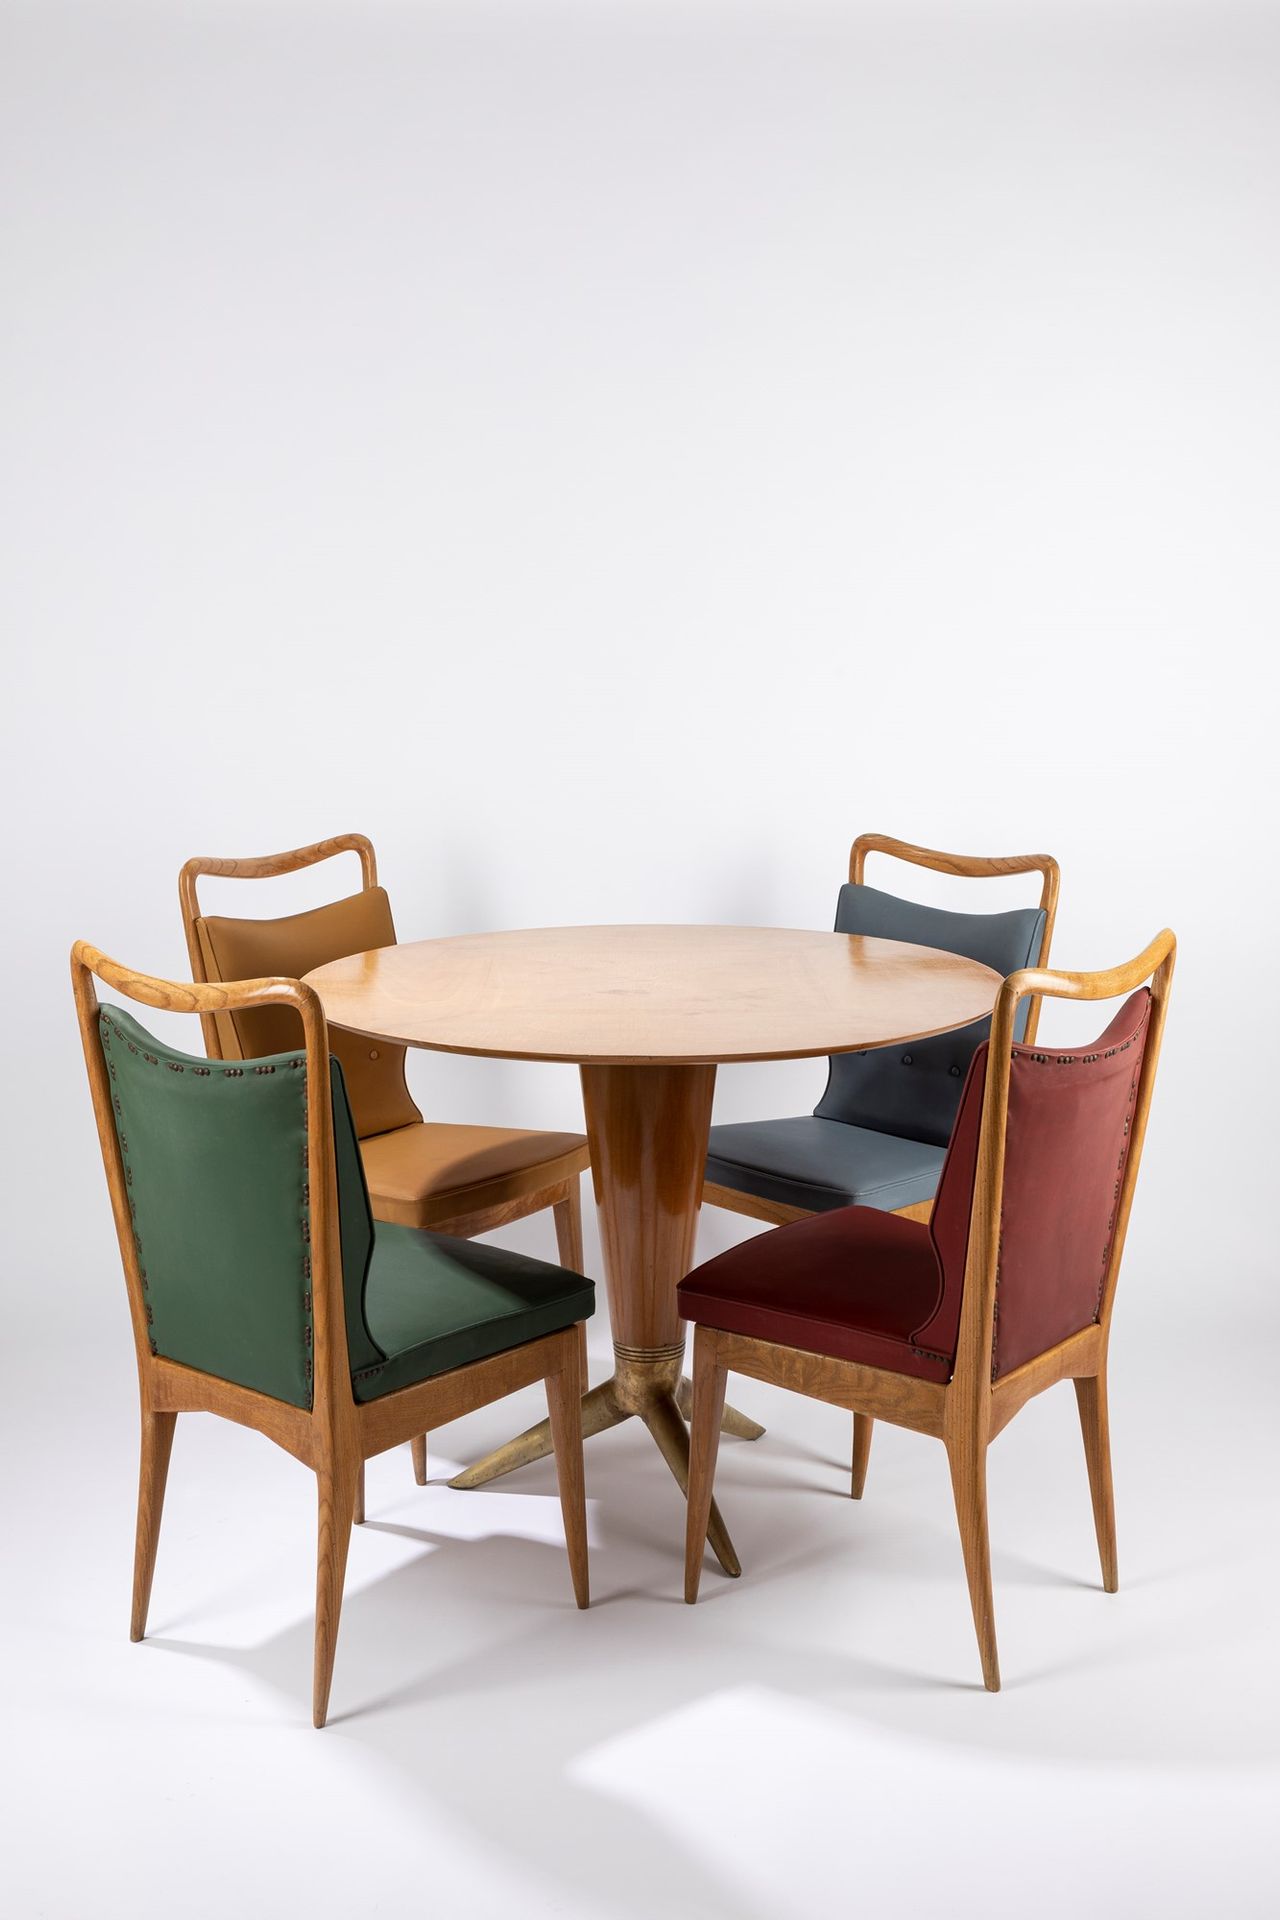 ISA, Bergamo 桌子和四把椅子，1950年约。

椅子90 x 50 x 50 - 桌子79 x 103
中央木质部分和金属底座。

皮革座椅和椅背，&hellip;